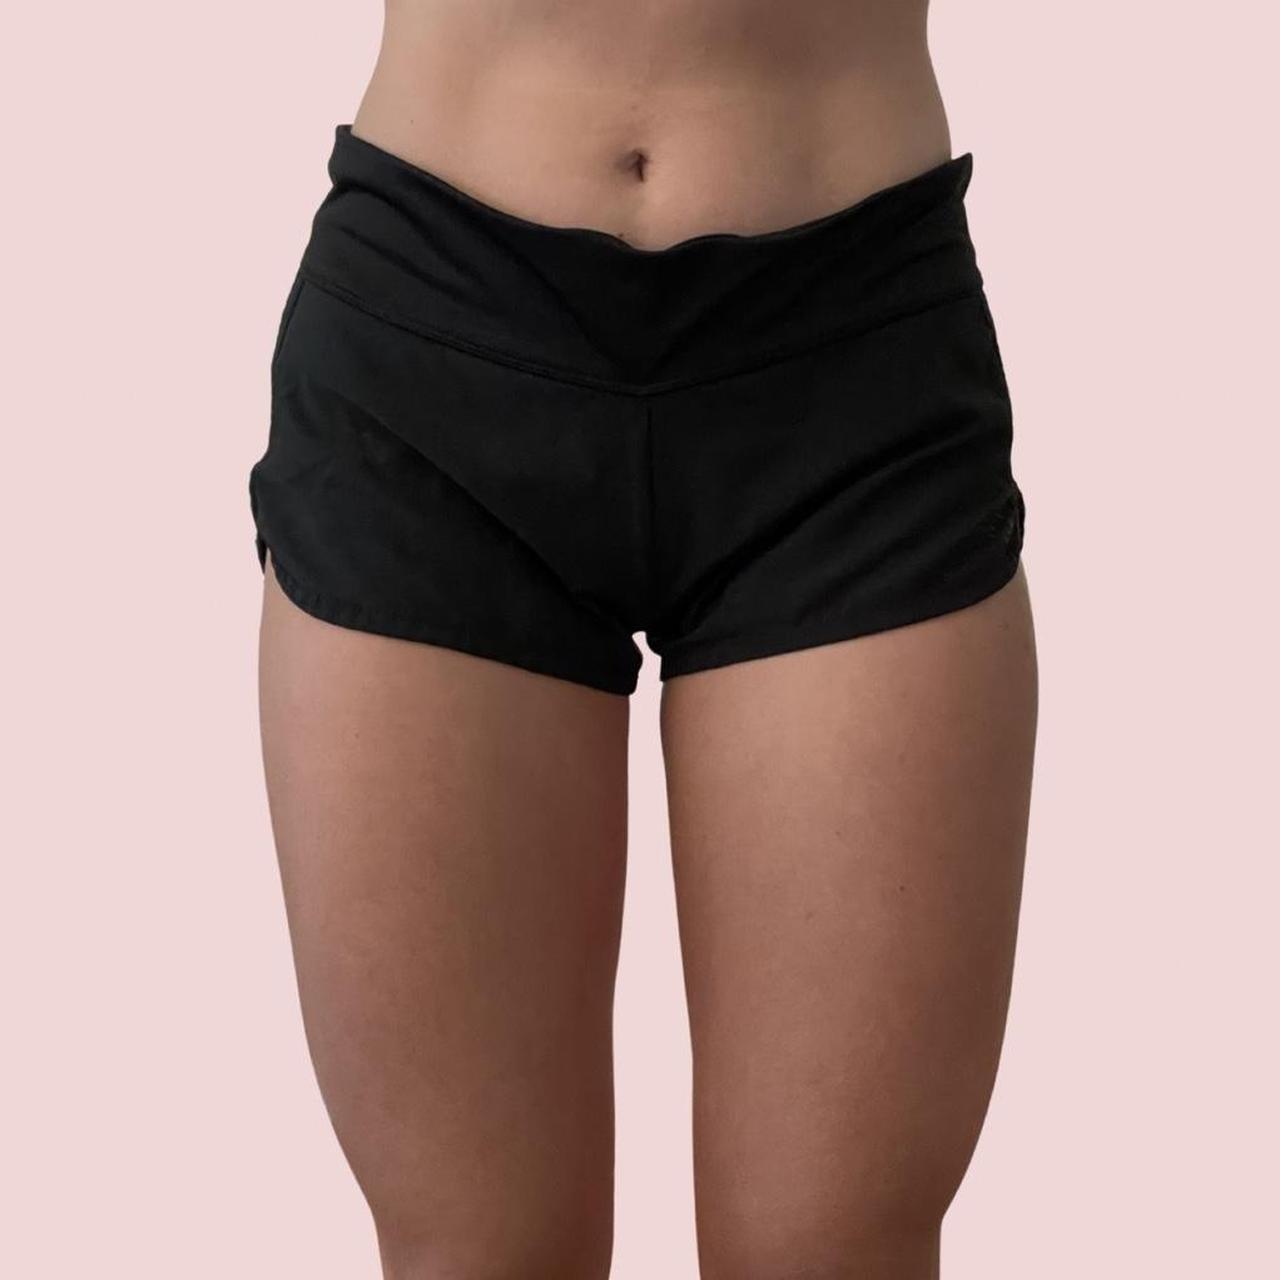 Black athletic shorts Super cute plain black - Depop